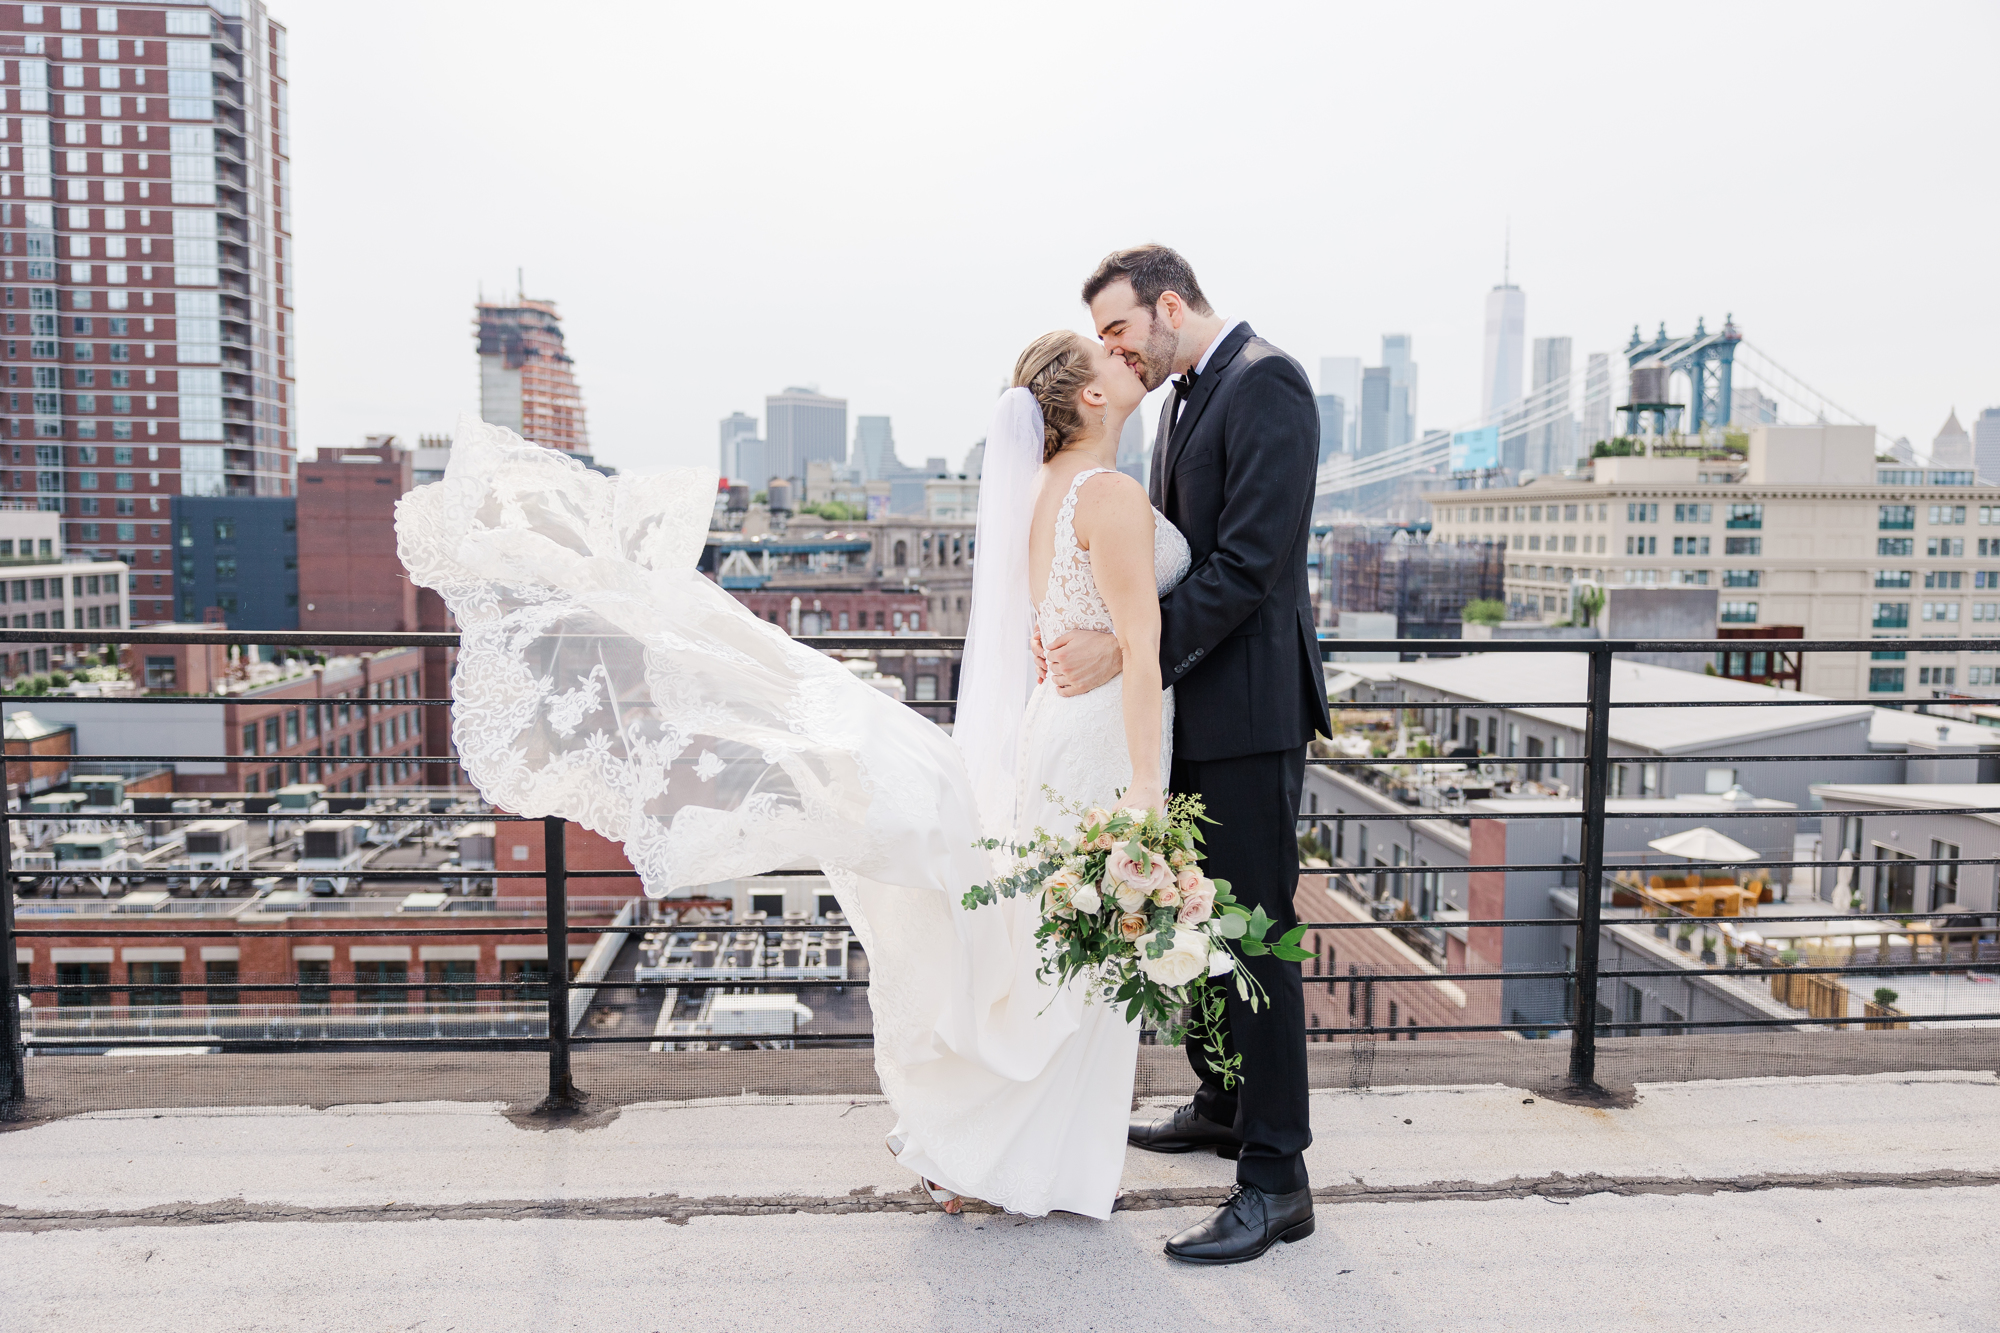 Romantic Brooklyn Wedding Photos at Bridgepoint Featuring the New York City Skyline 